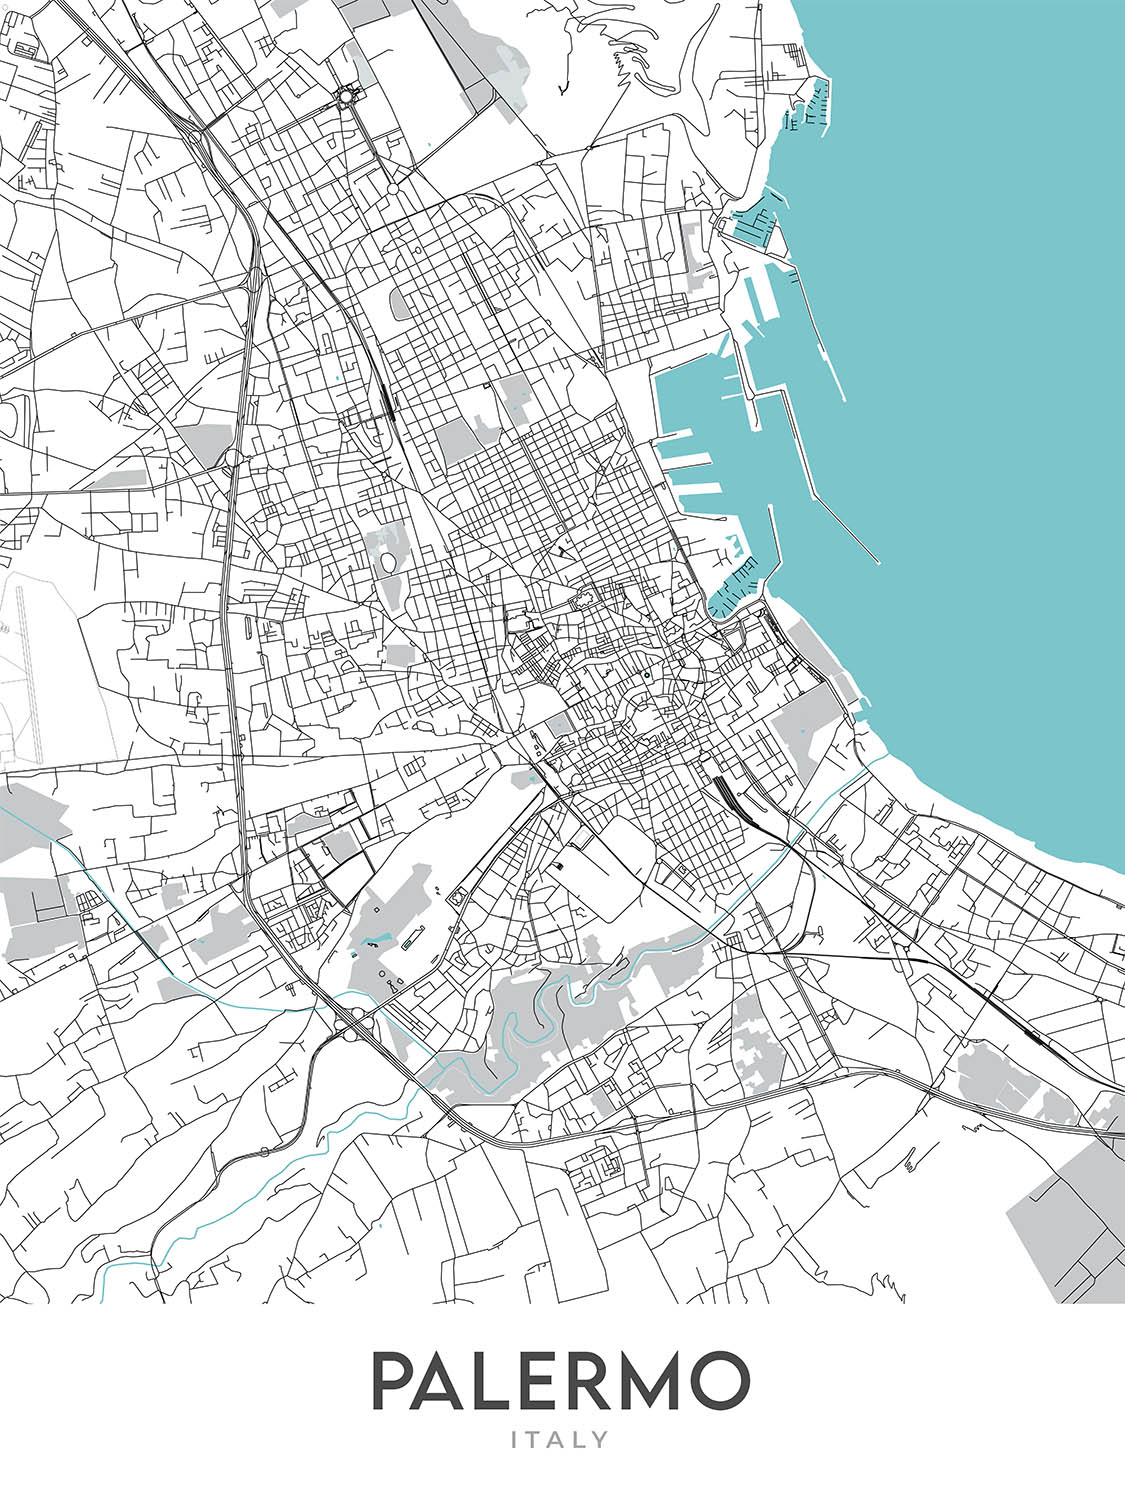 Plan de la ville moderne de Palerme, Italie : Albergheria, Kalsa, Teatro Massimo, Politeama, Quattro Canti